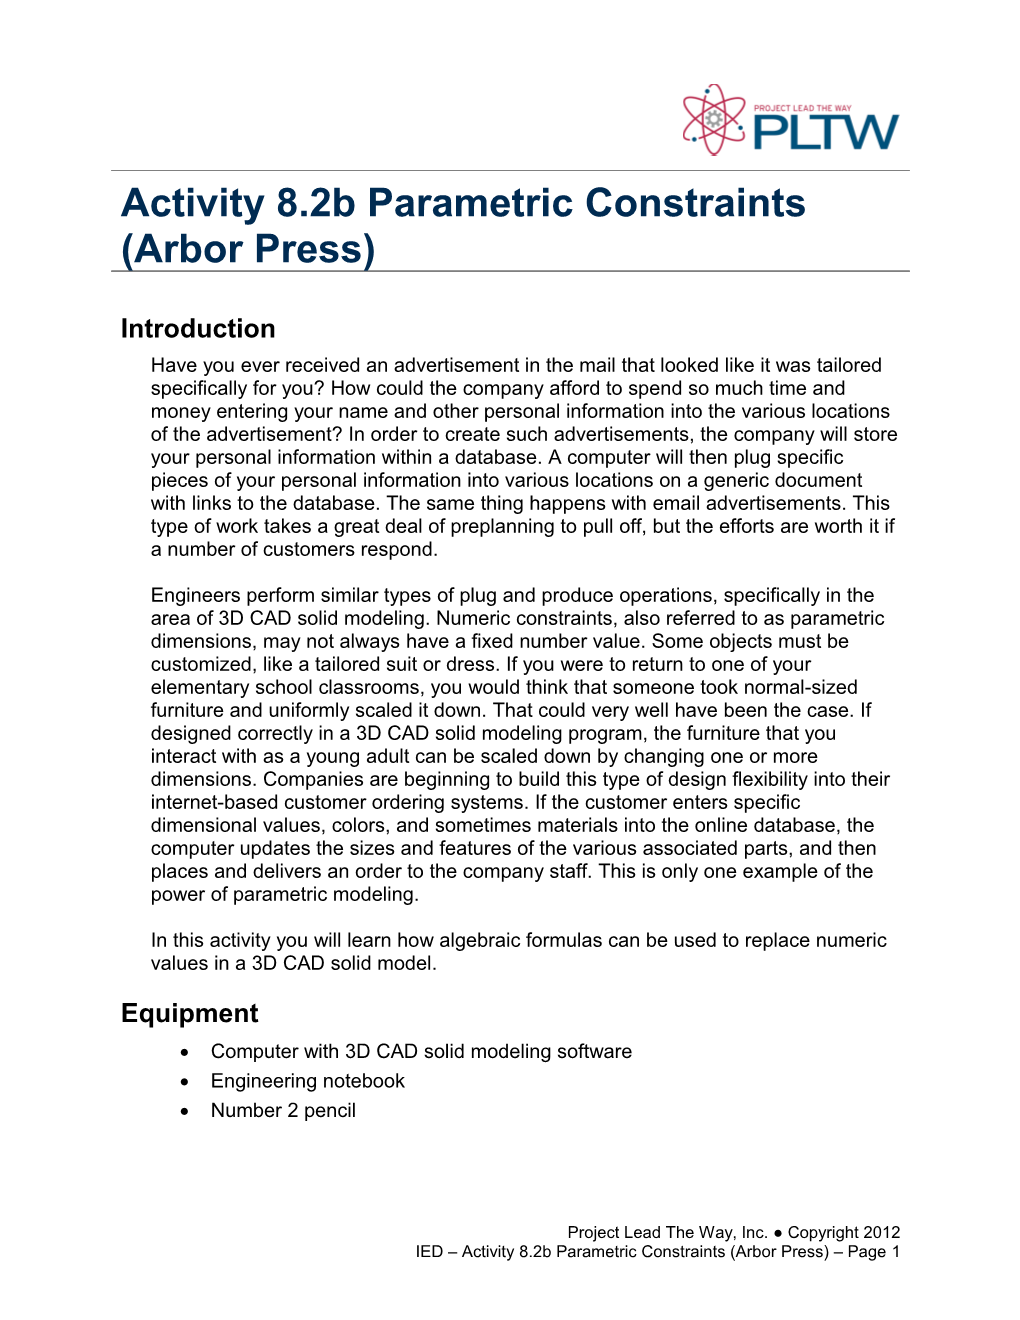 Activity 8.2B Parametric Constraints (Arbor Press)